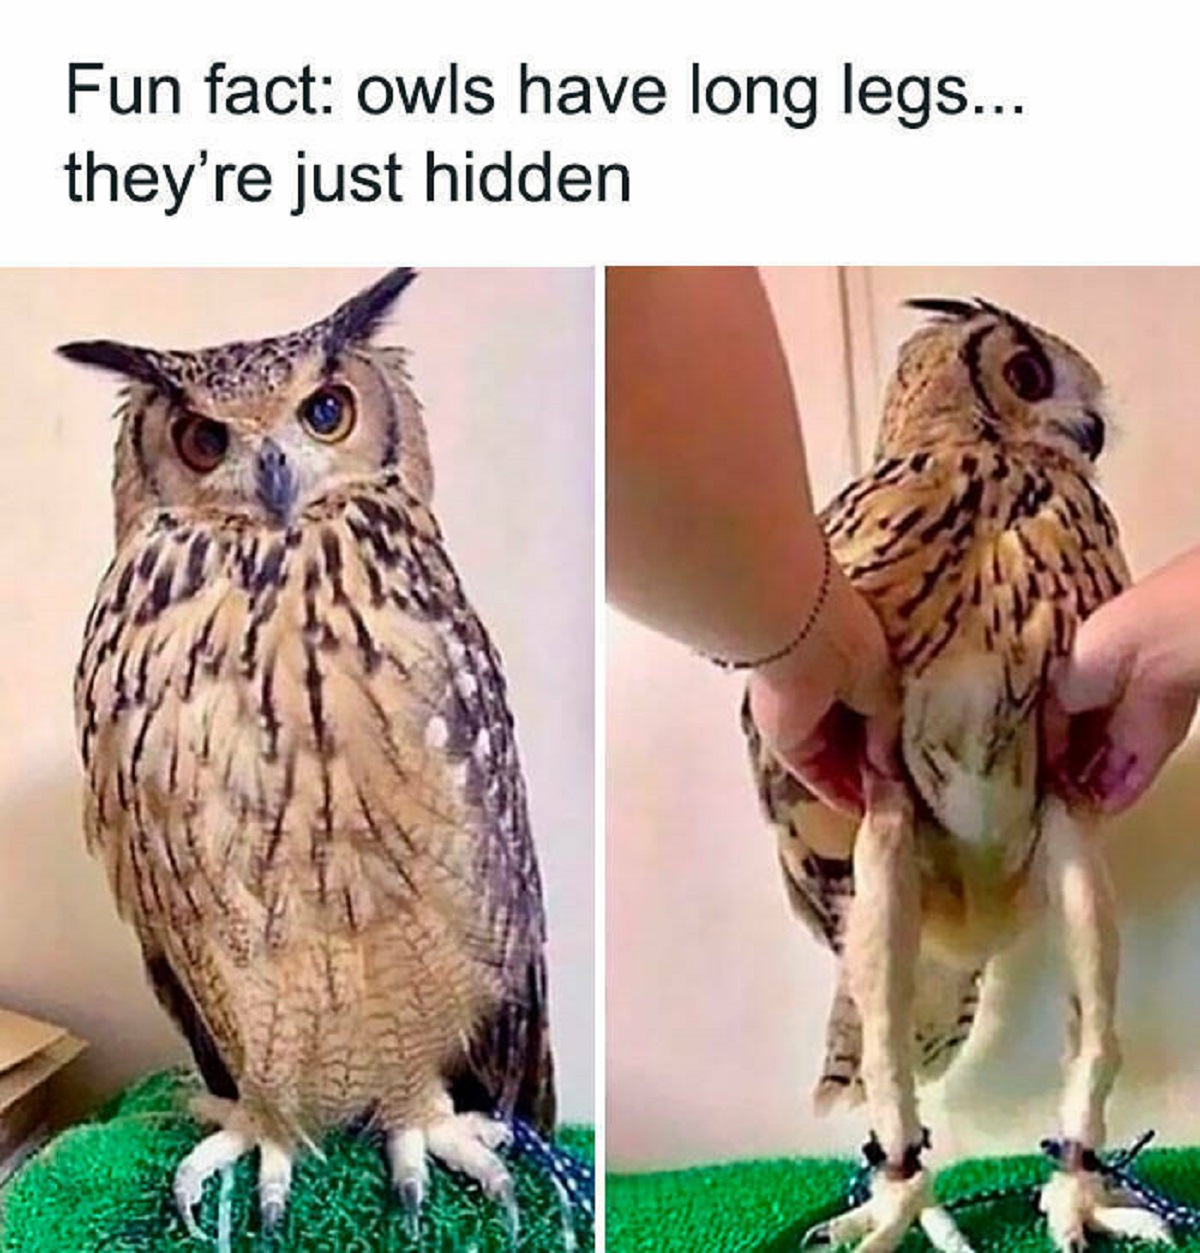 owl meme - Fun fact owls have long legs... they're just hidden